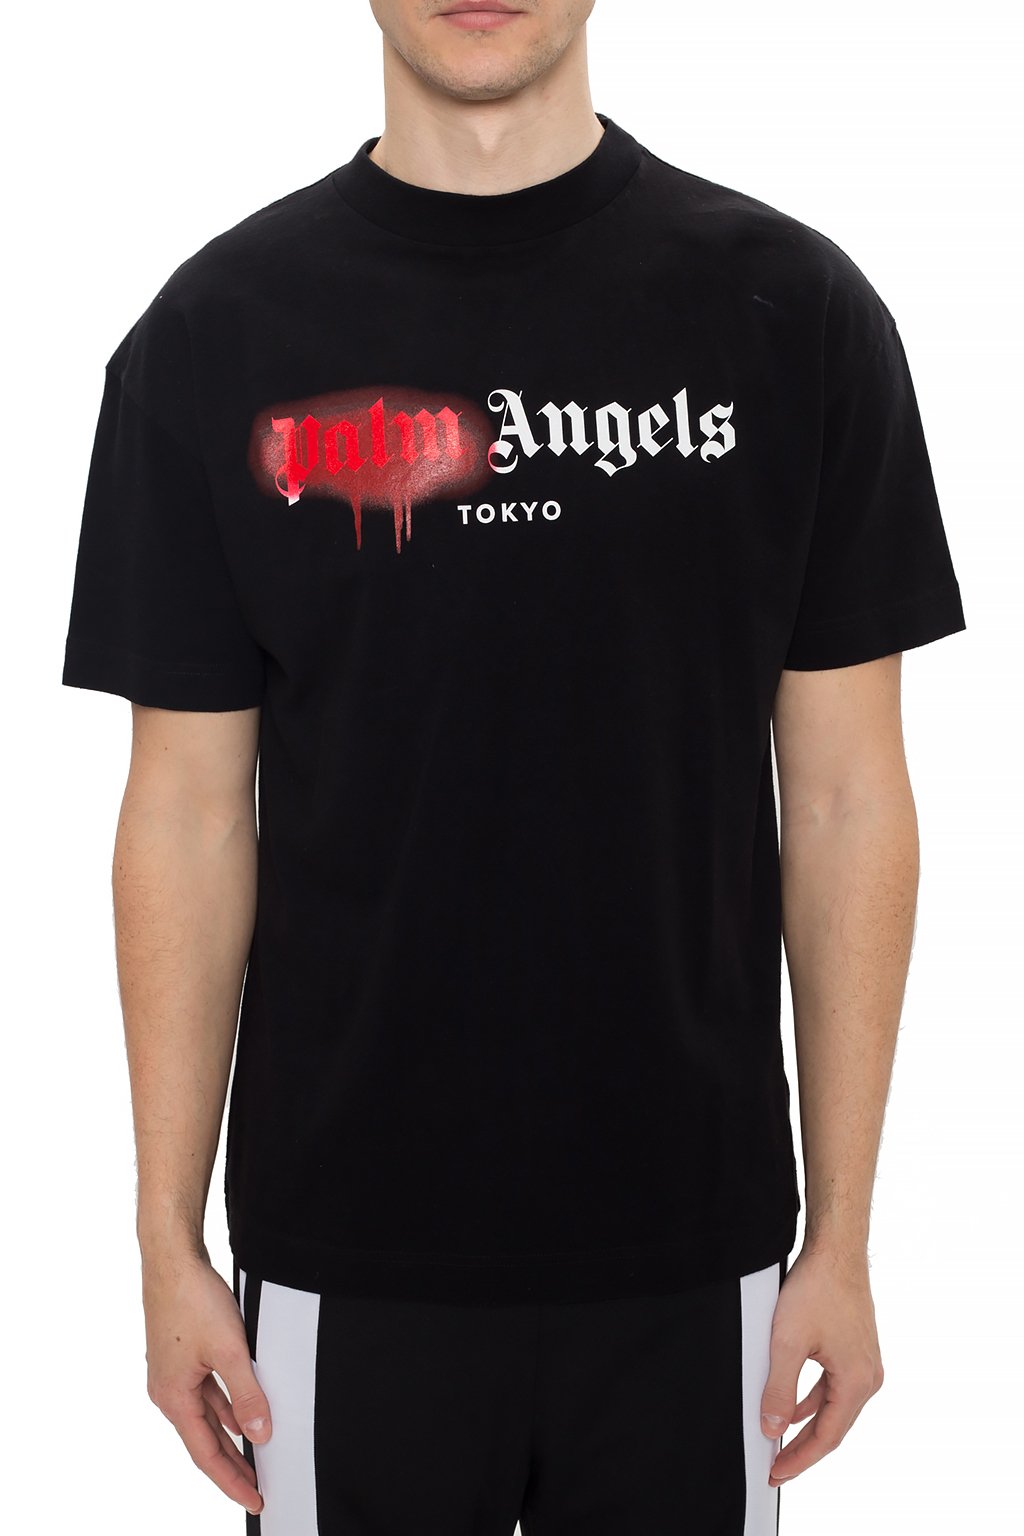 t shirt palm angels tokyo